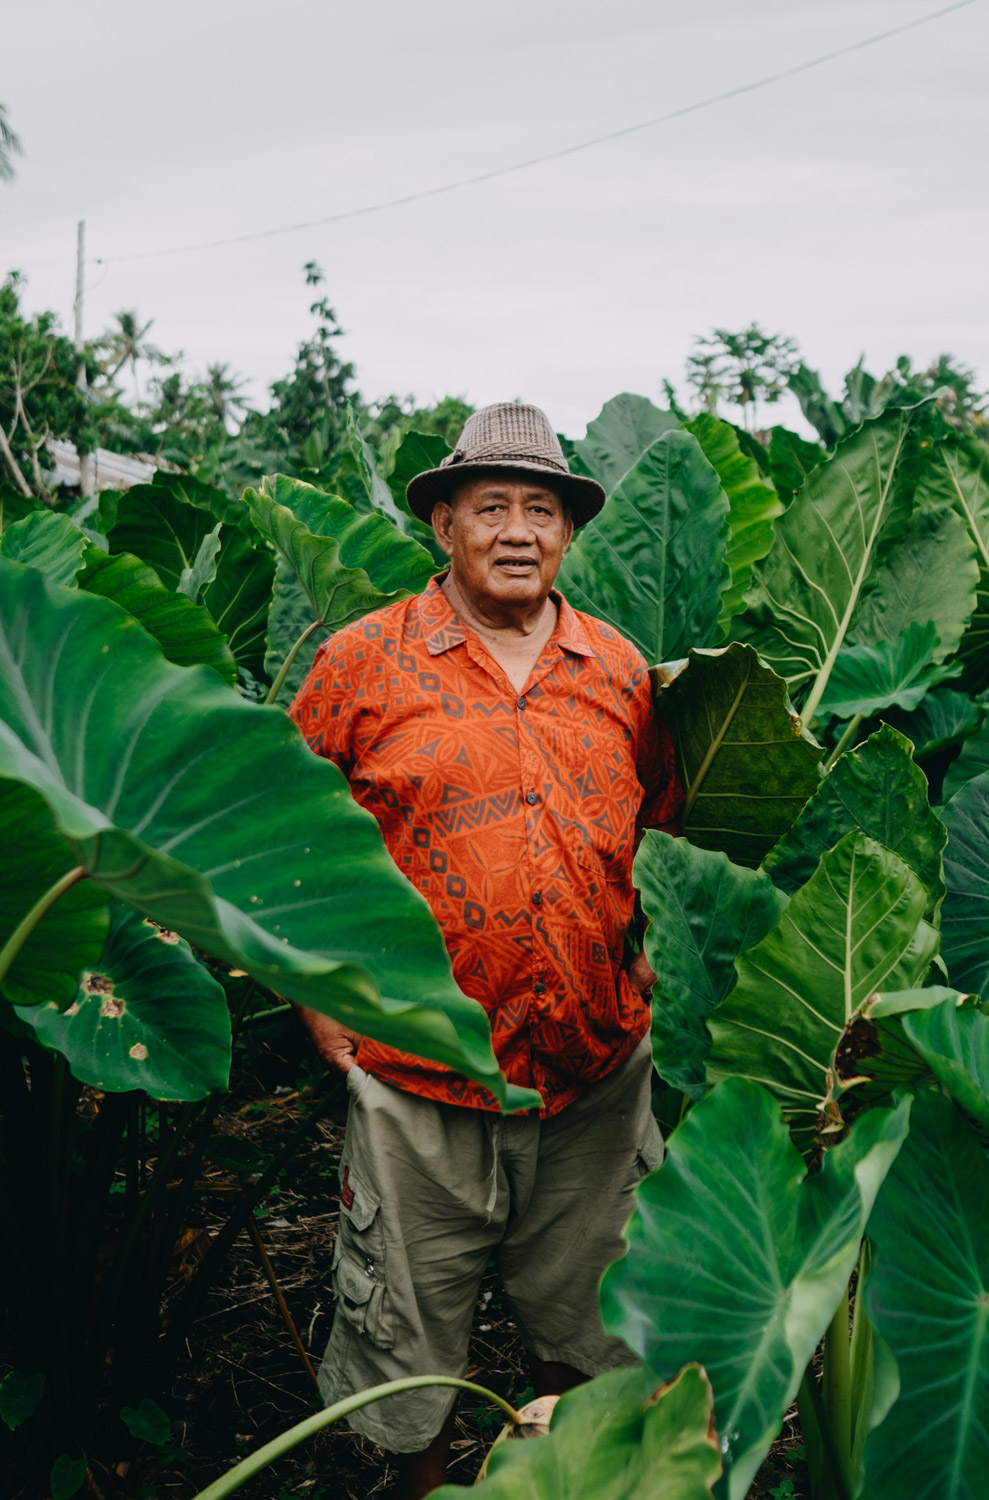 SAFPROM-Samoa-SamoaMinistryofAgriculture-Vegetablefarmer-farmer-agriculture-documentary-photography-documentaryfilm-fisherman-4-1